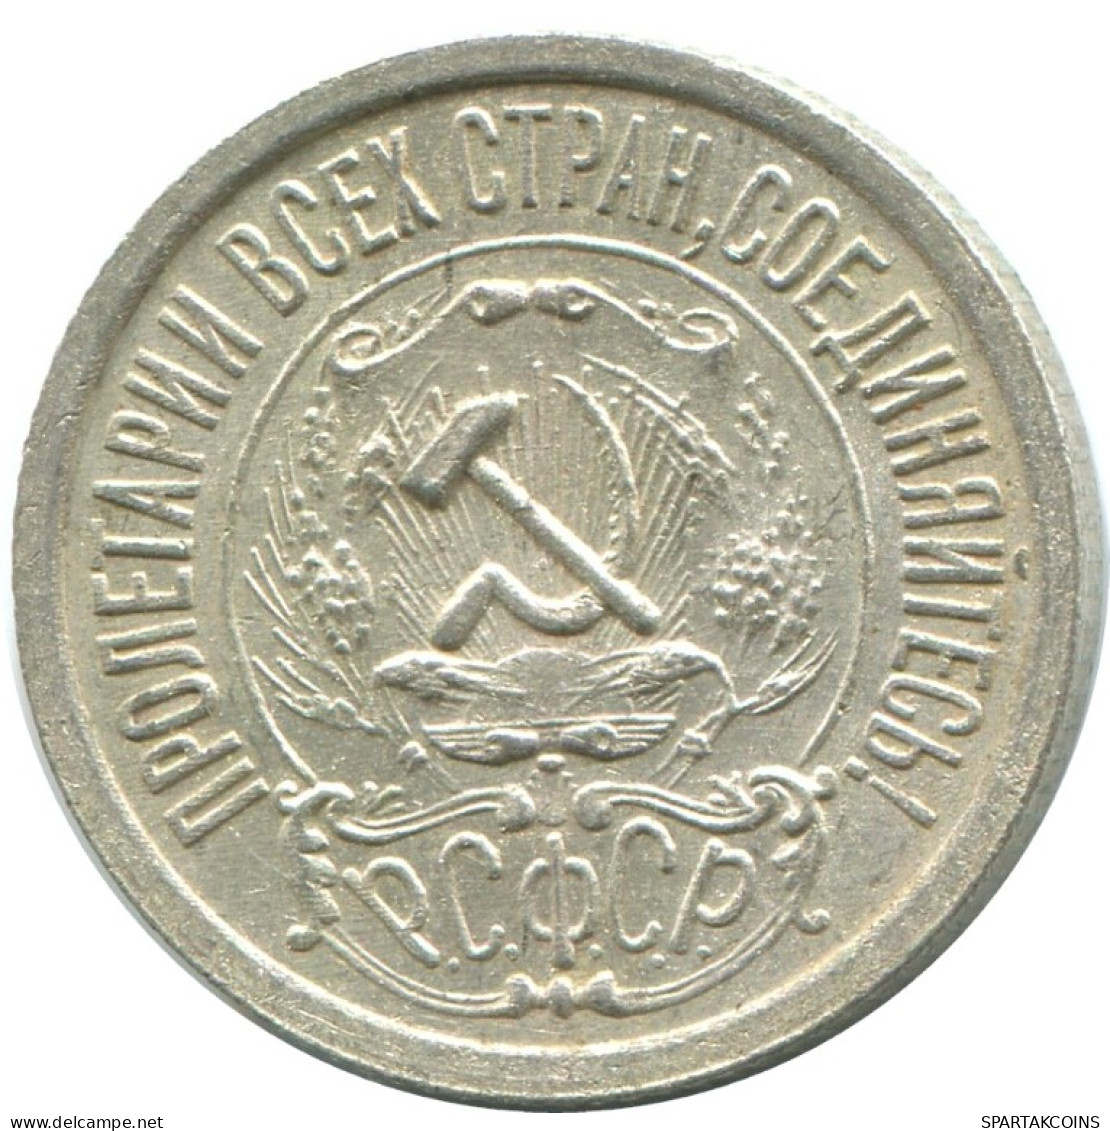 15 KOPEKS 1922 RUSSIA RSFSR SILVER Coin HIGH GRADE #AF236.4.U.A - Russie